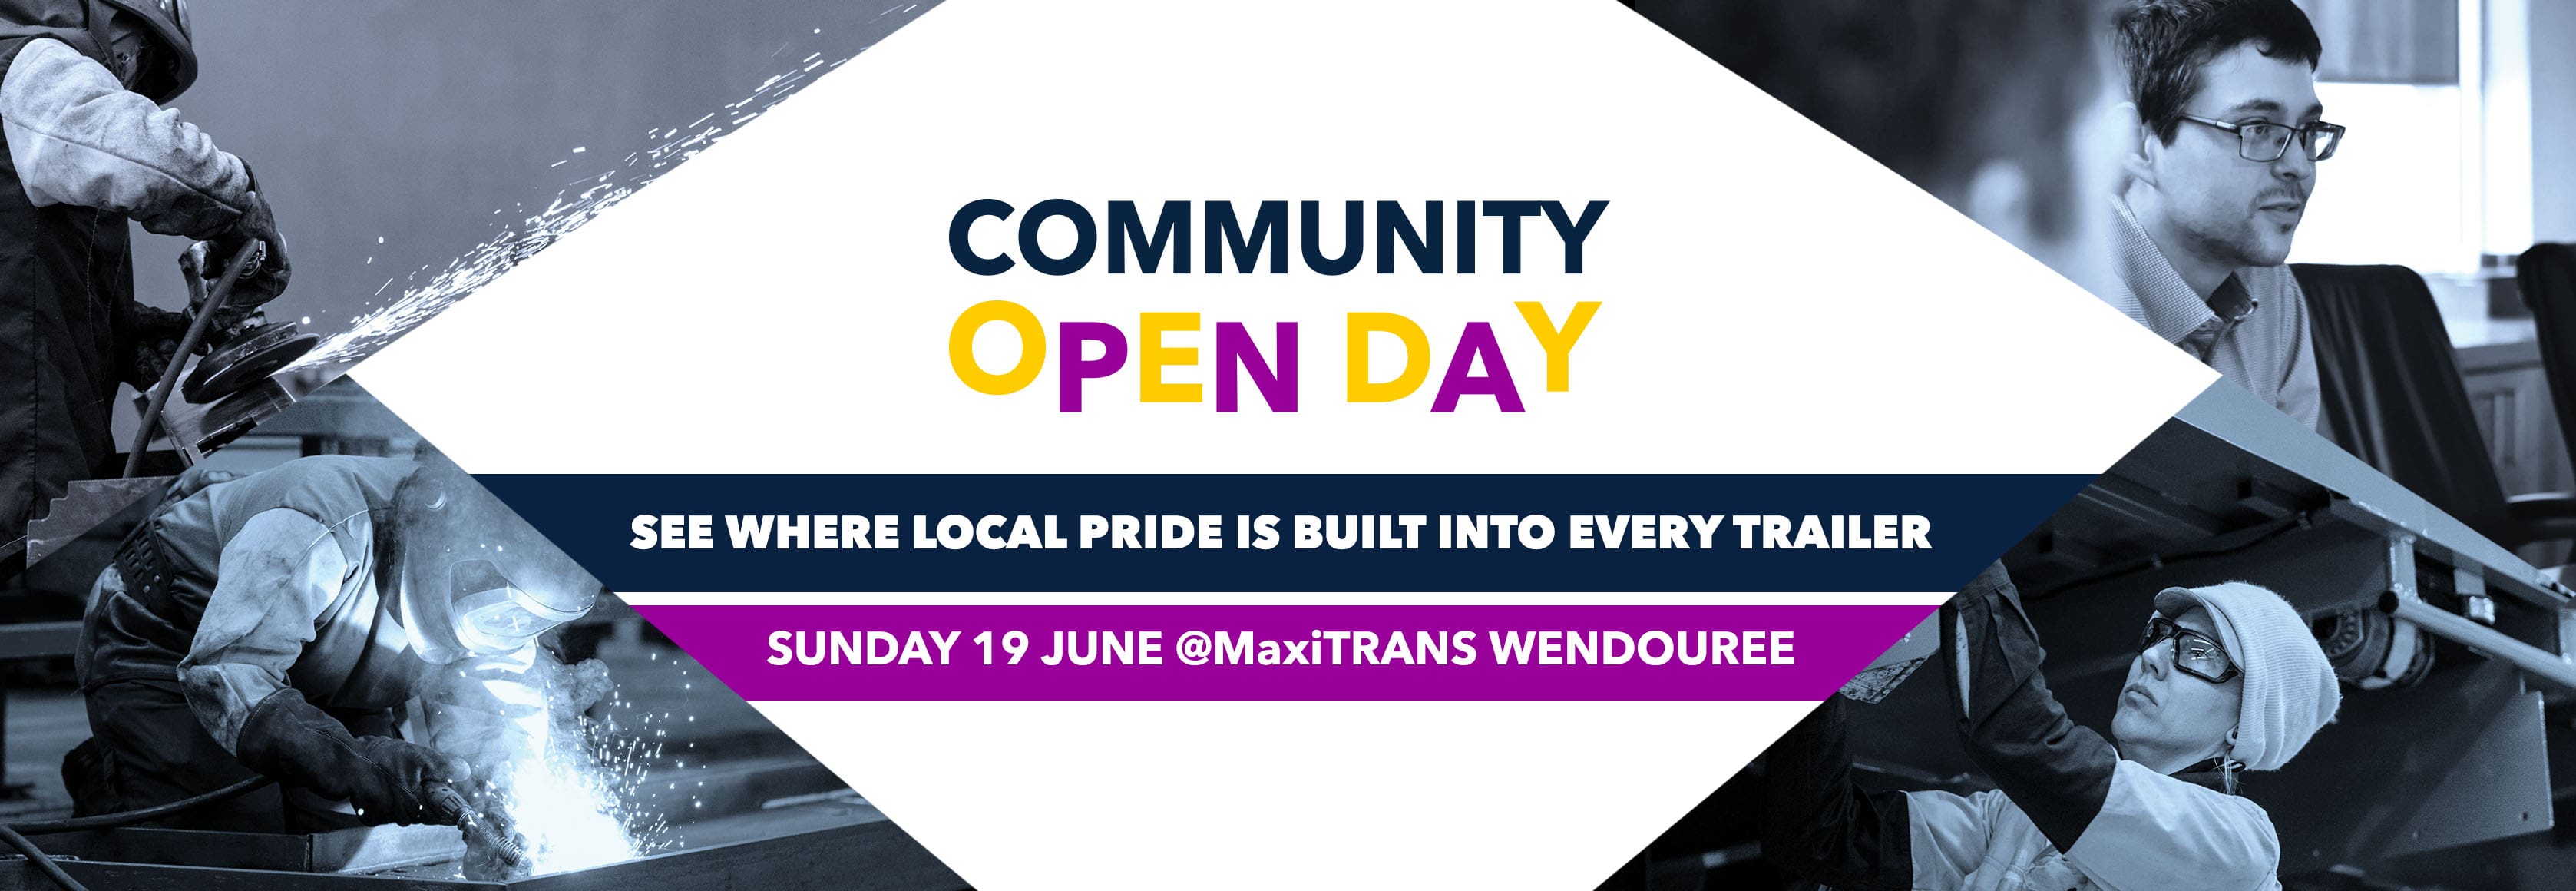 Community open day Ballarat